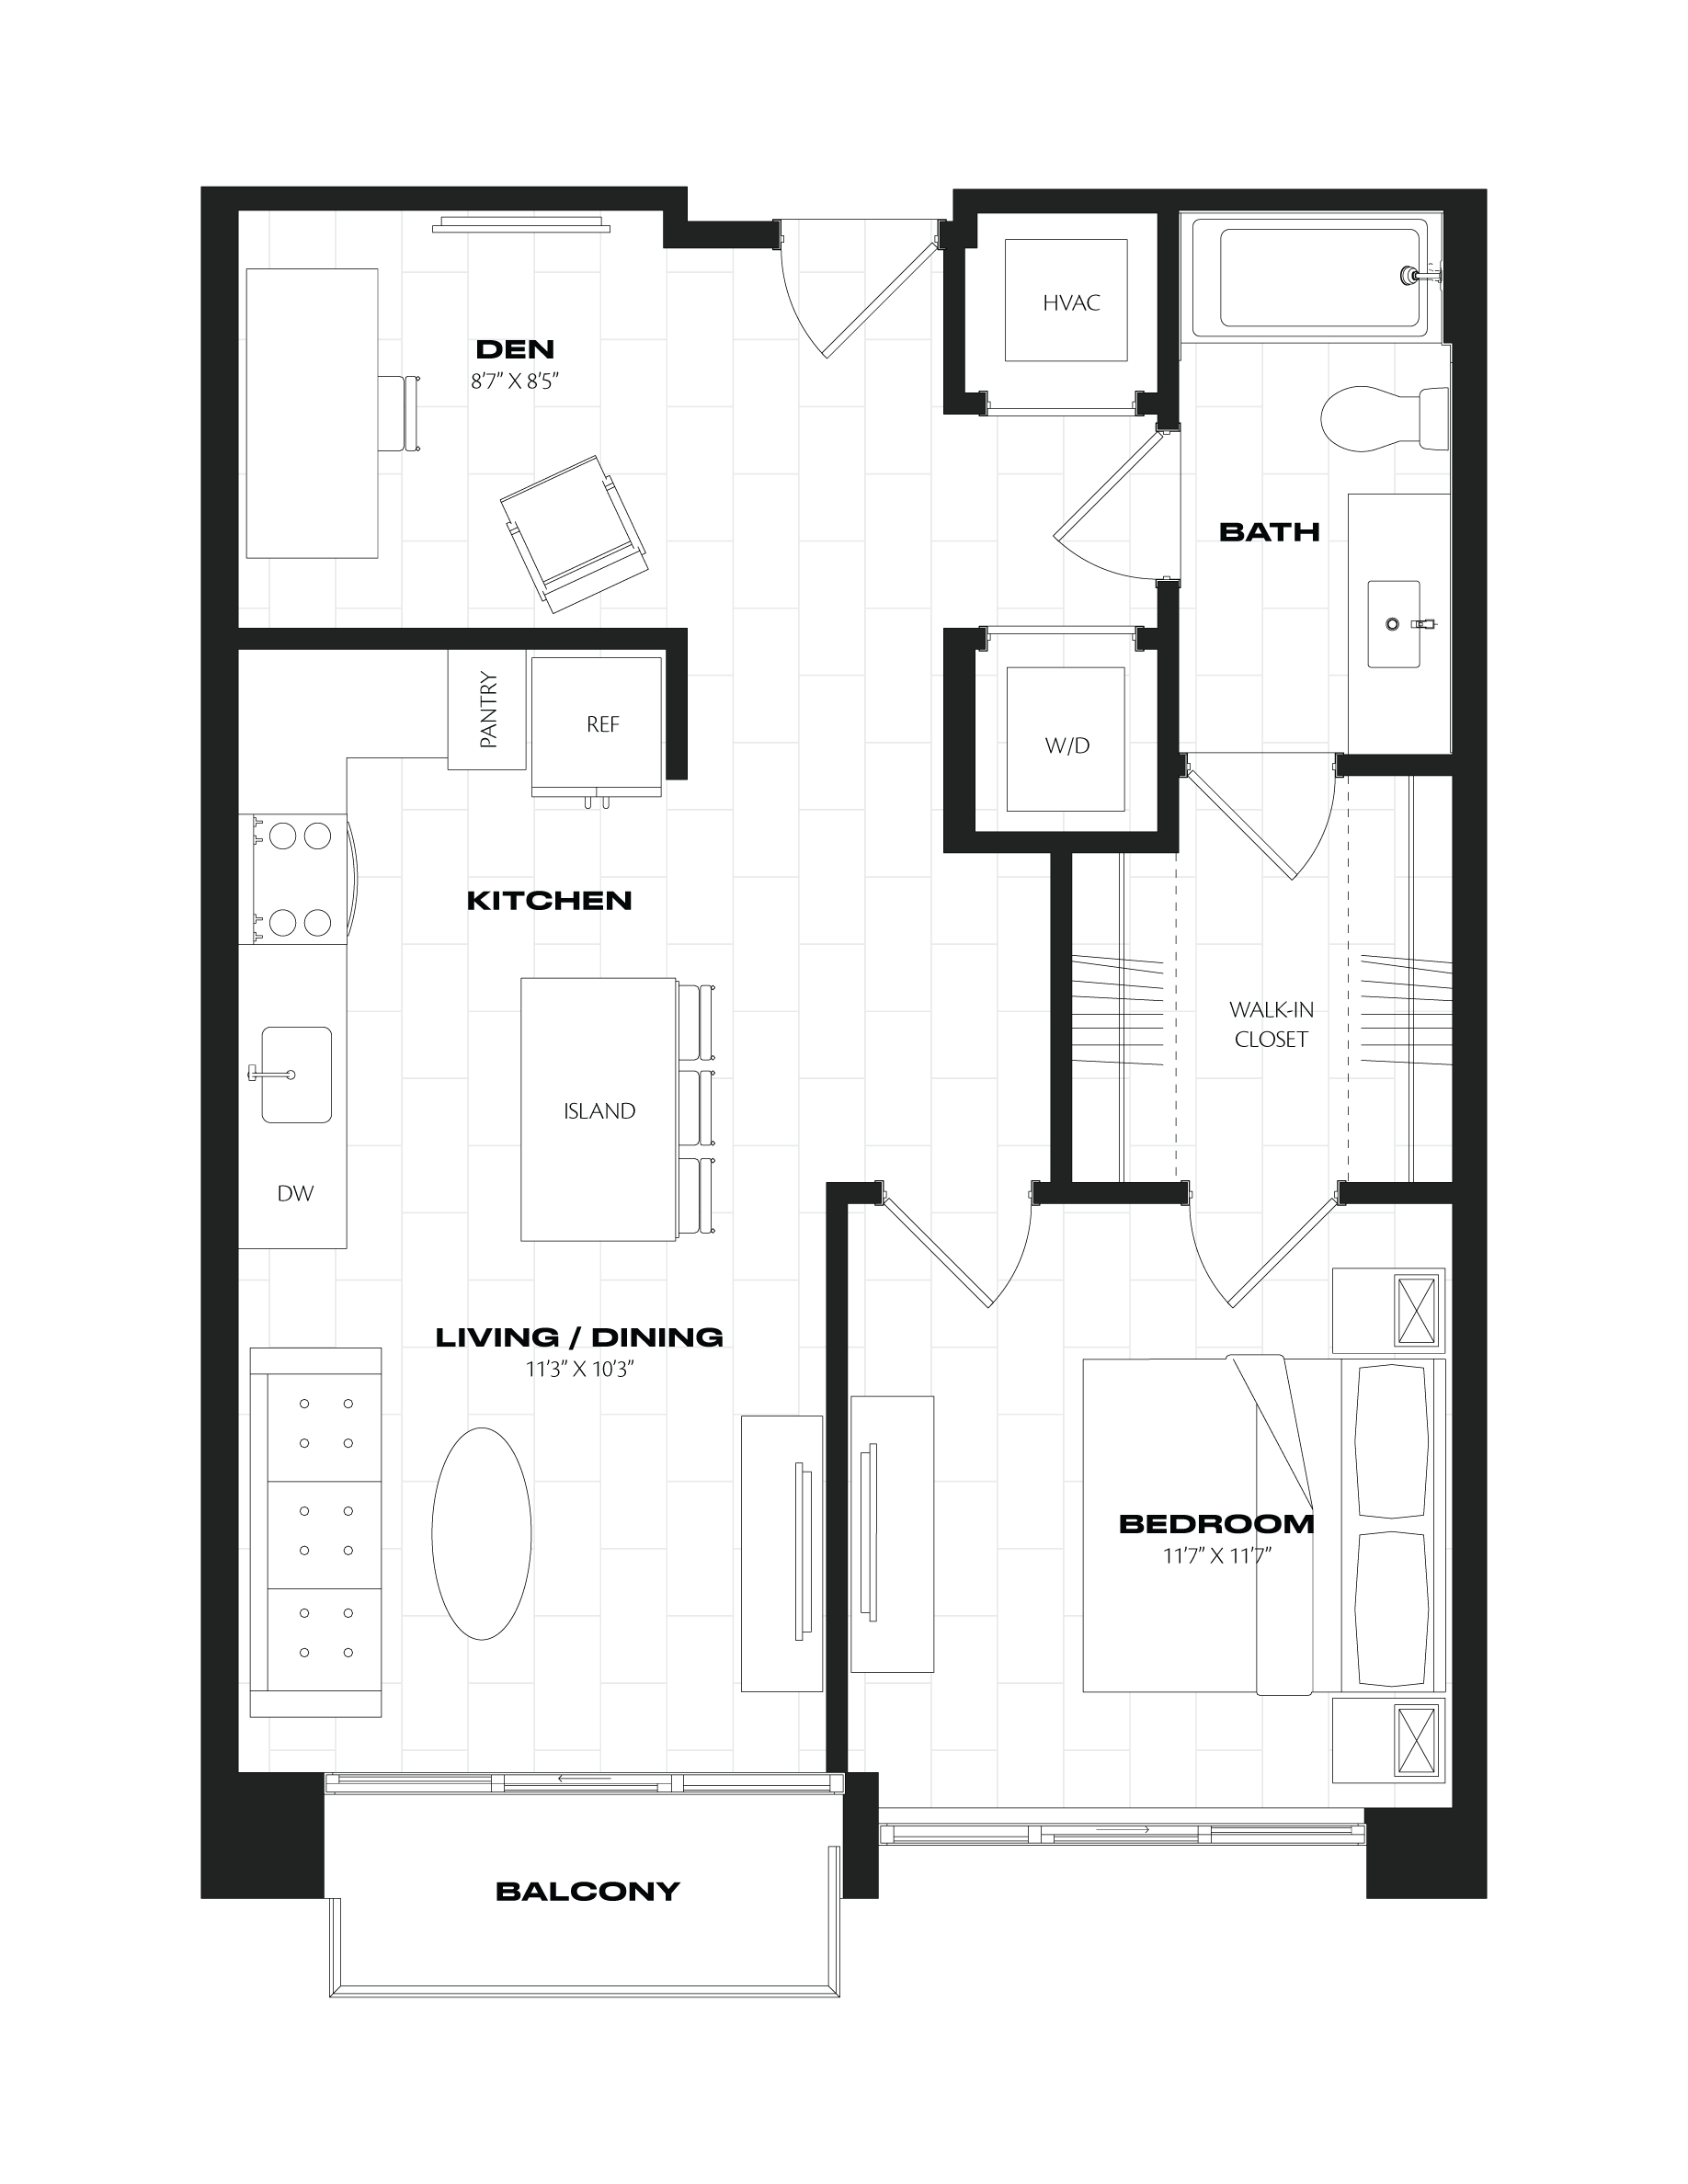 Apartment 0805 floorplan